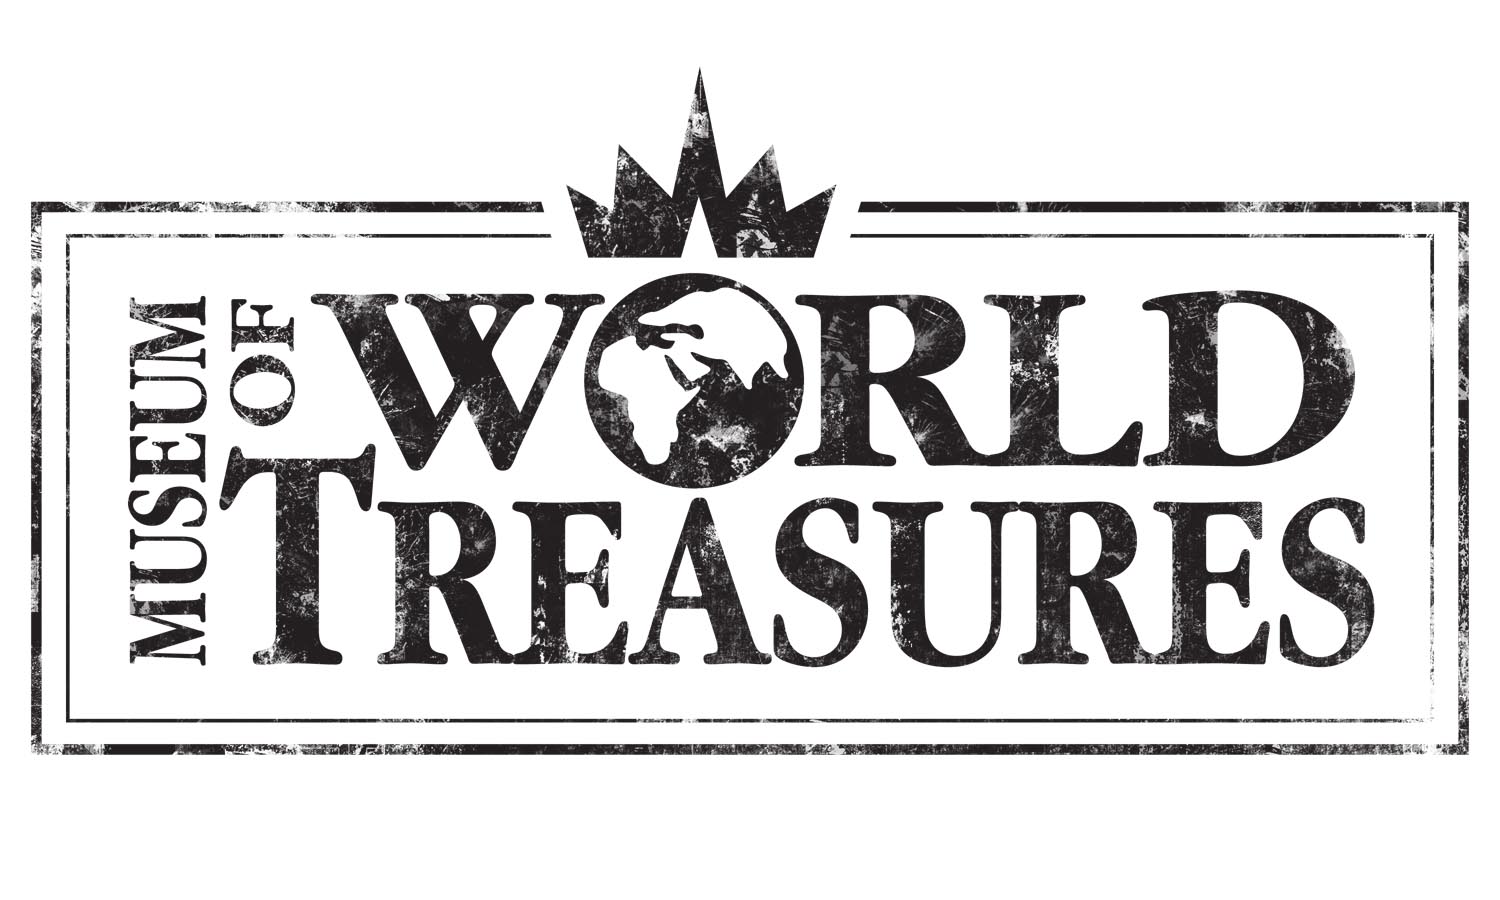 Museum of World Treasures logo